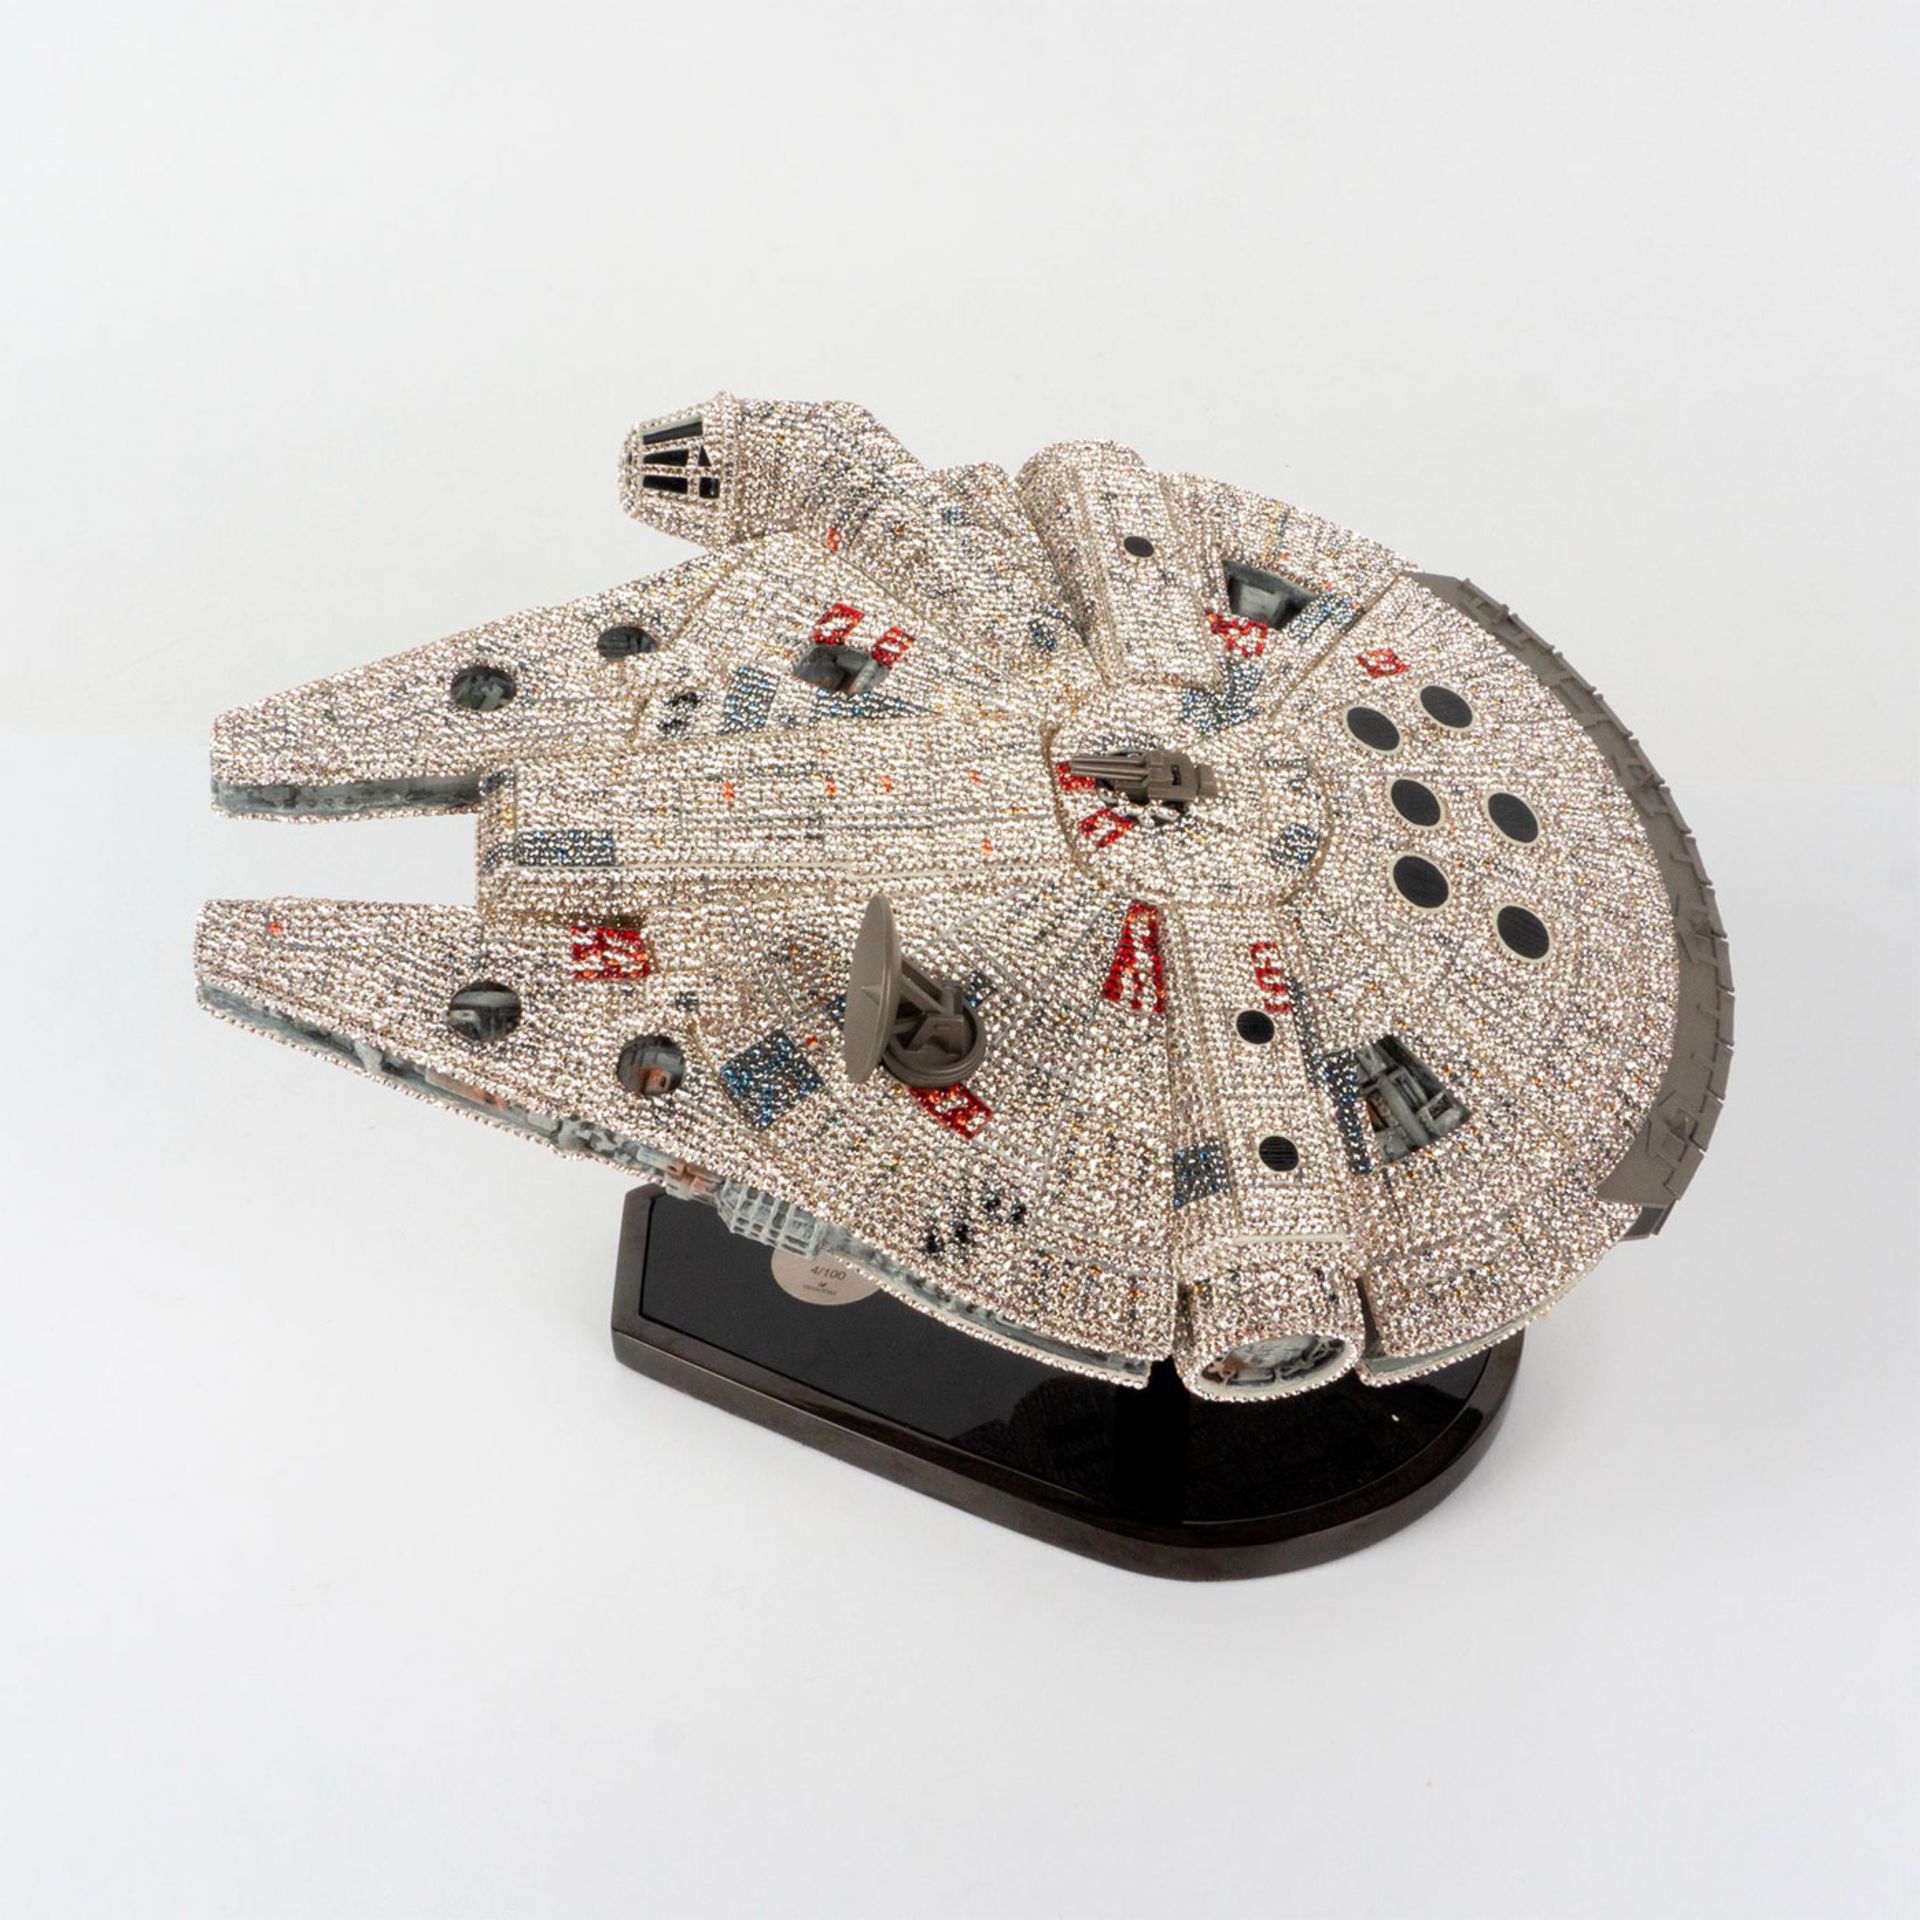 Swarovski Crystal Sculpture, Star Wars Millennium Falcon - Image 5 of 8